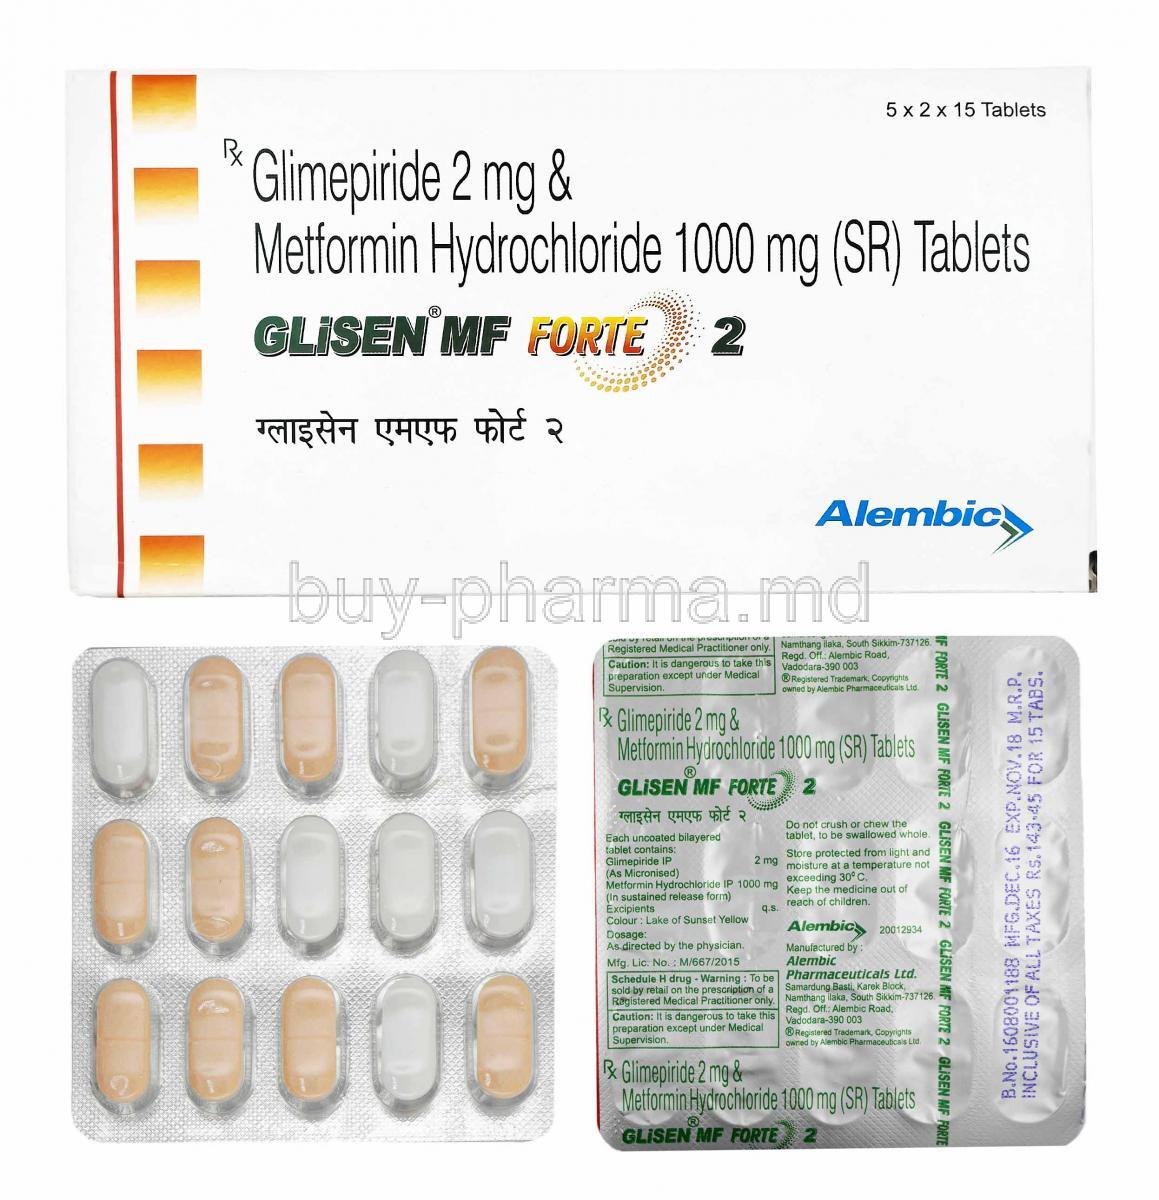 Glisen MF Forte, Glimepiride and Metformin 2mg box and tablets